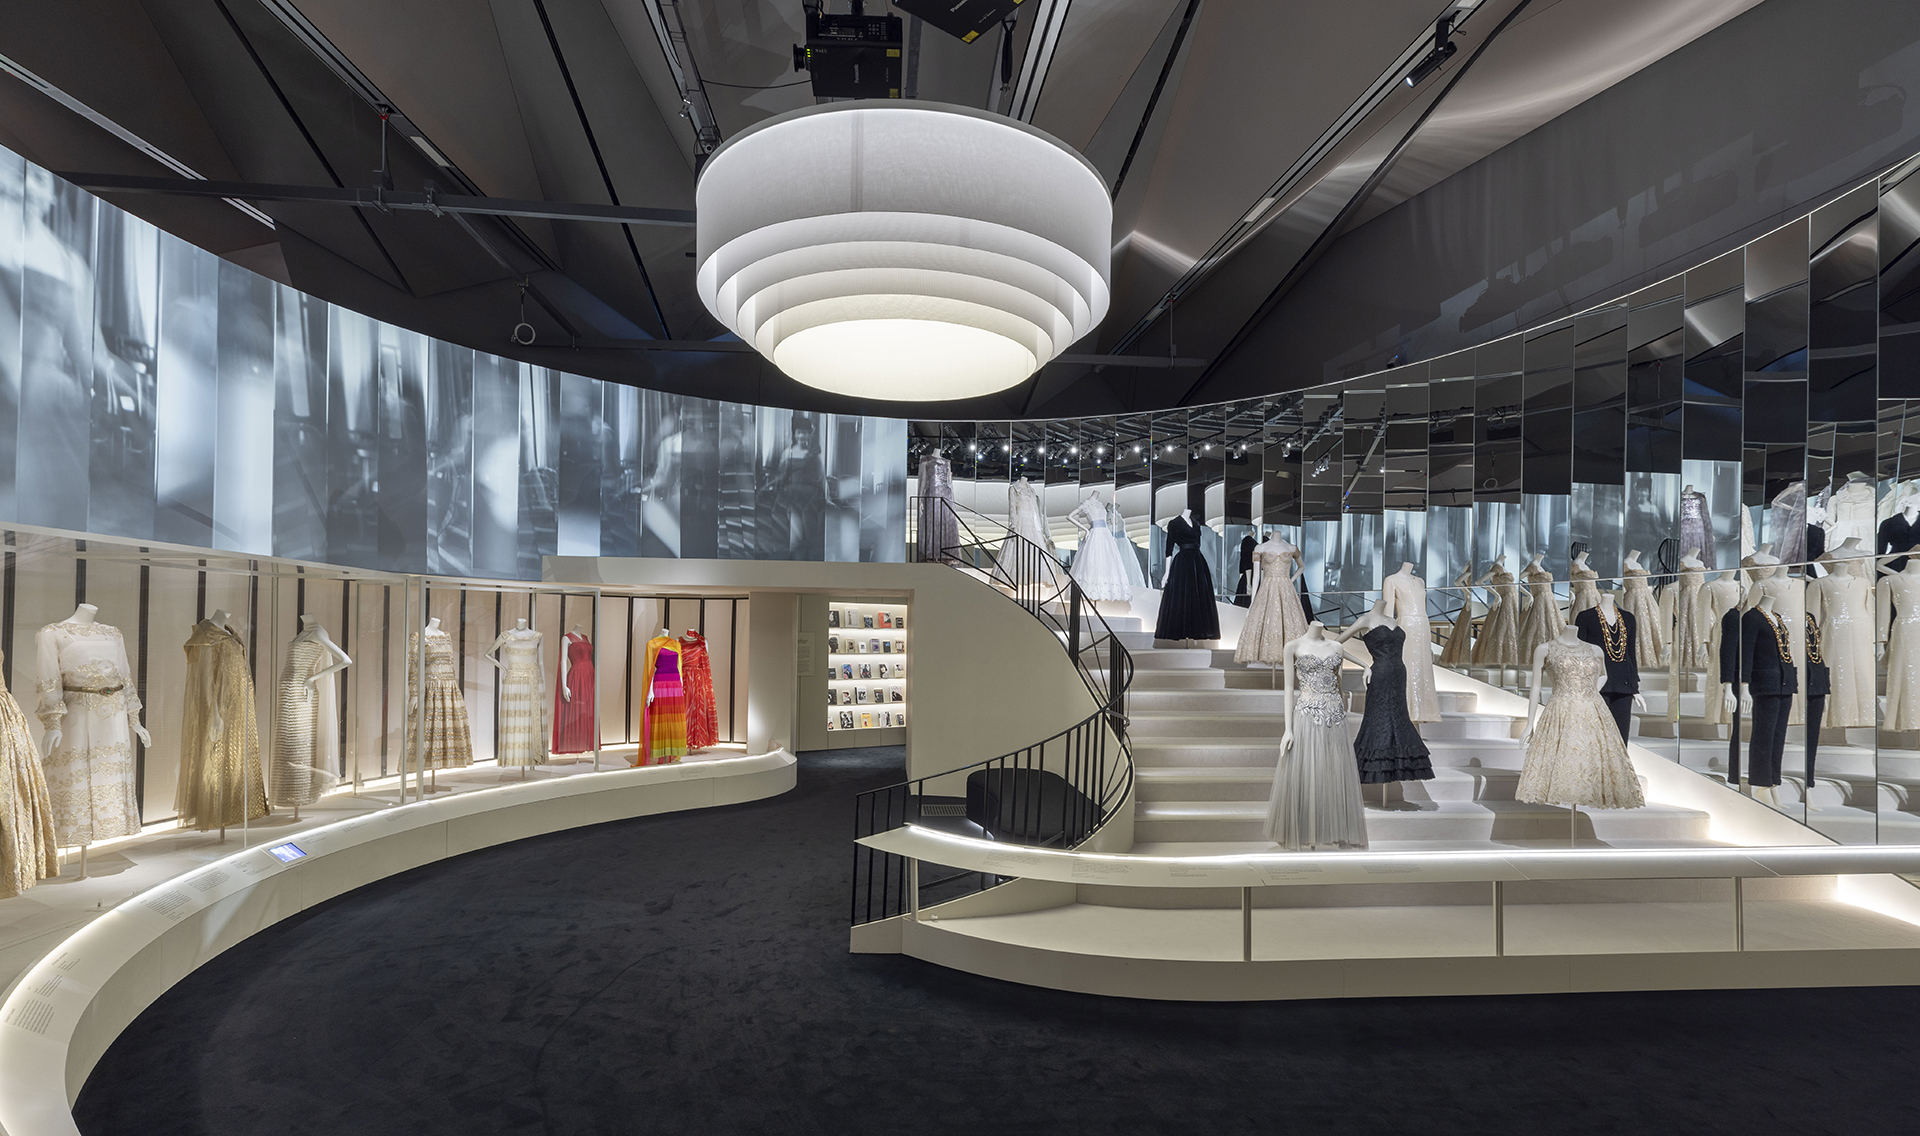 An Astounding Chanel Retrospective Opens at London's Victoria